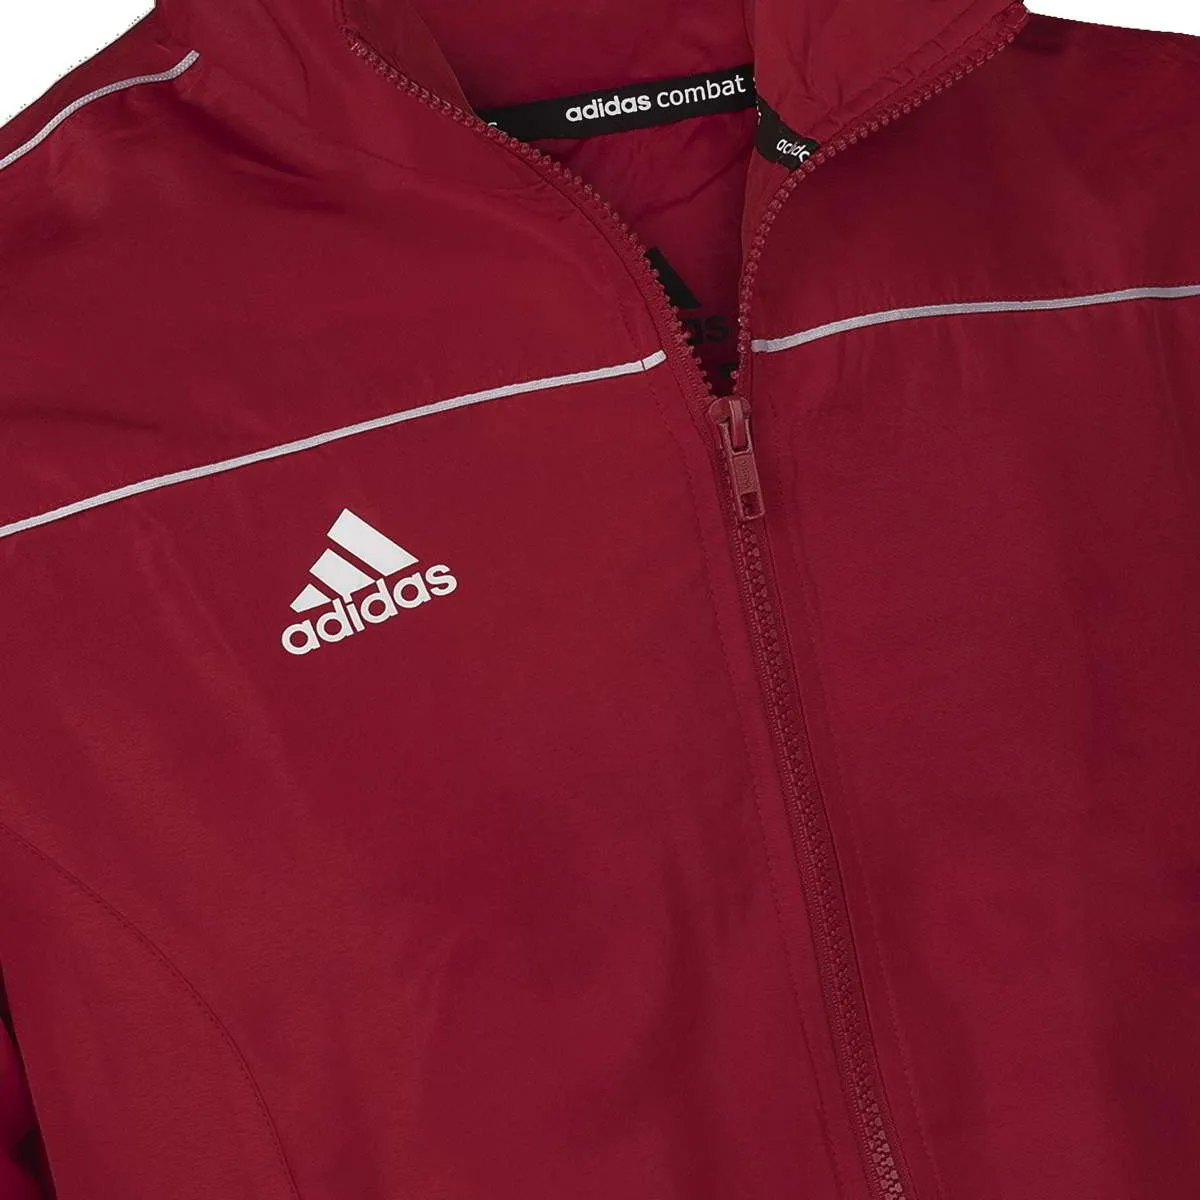 adidas tracksuit jacket red